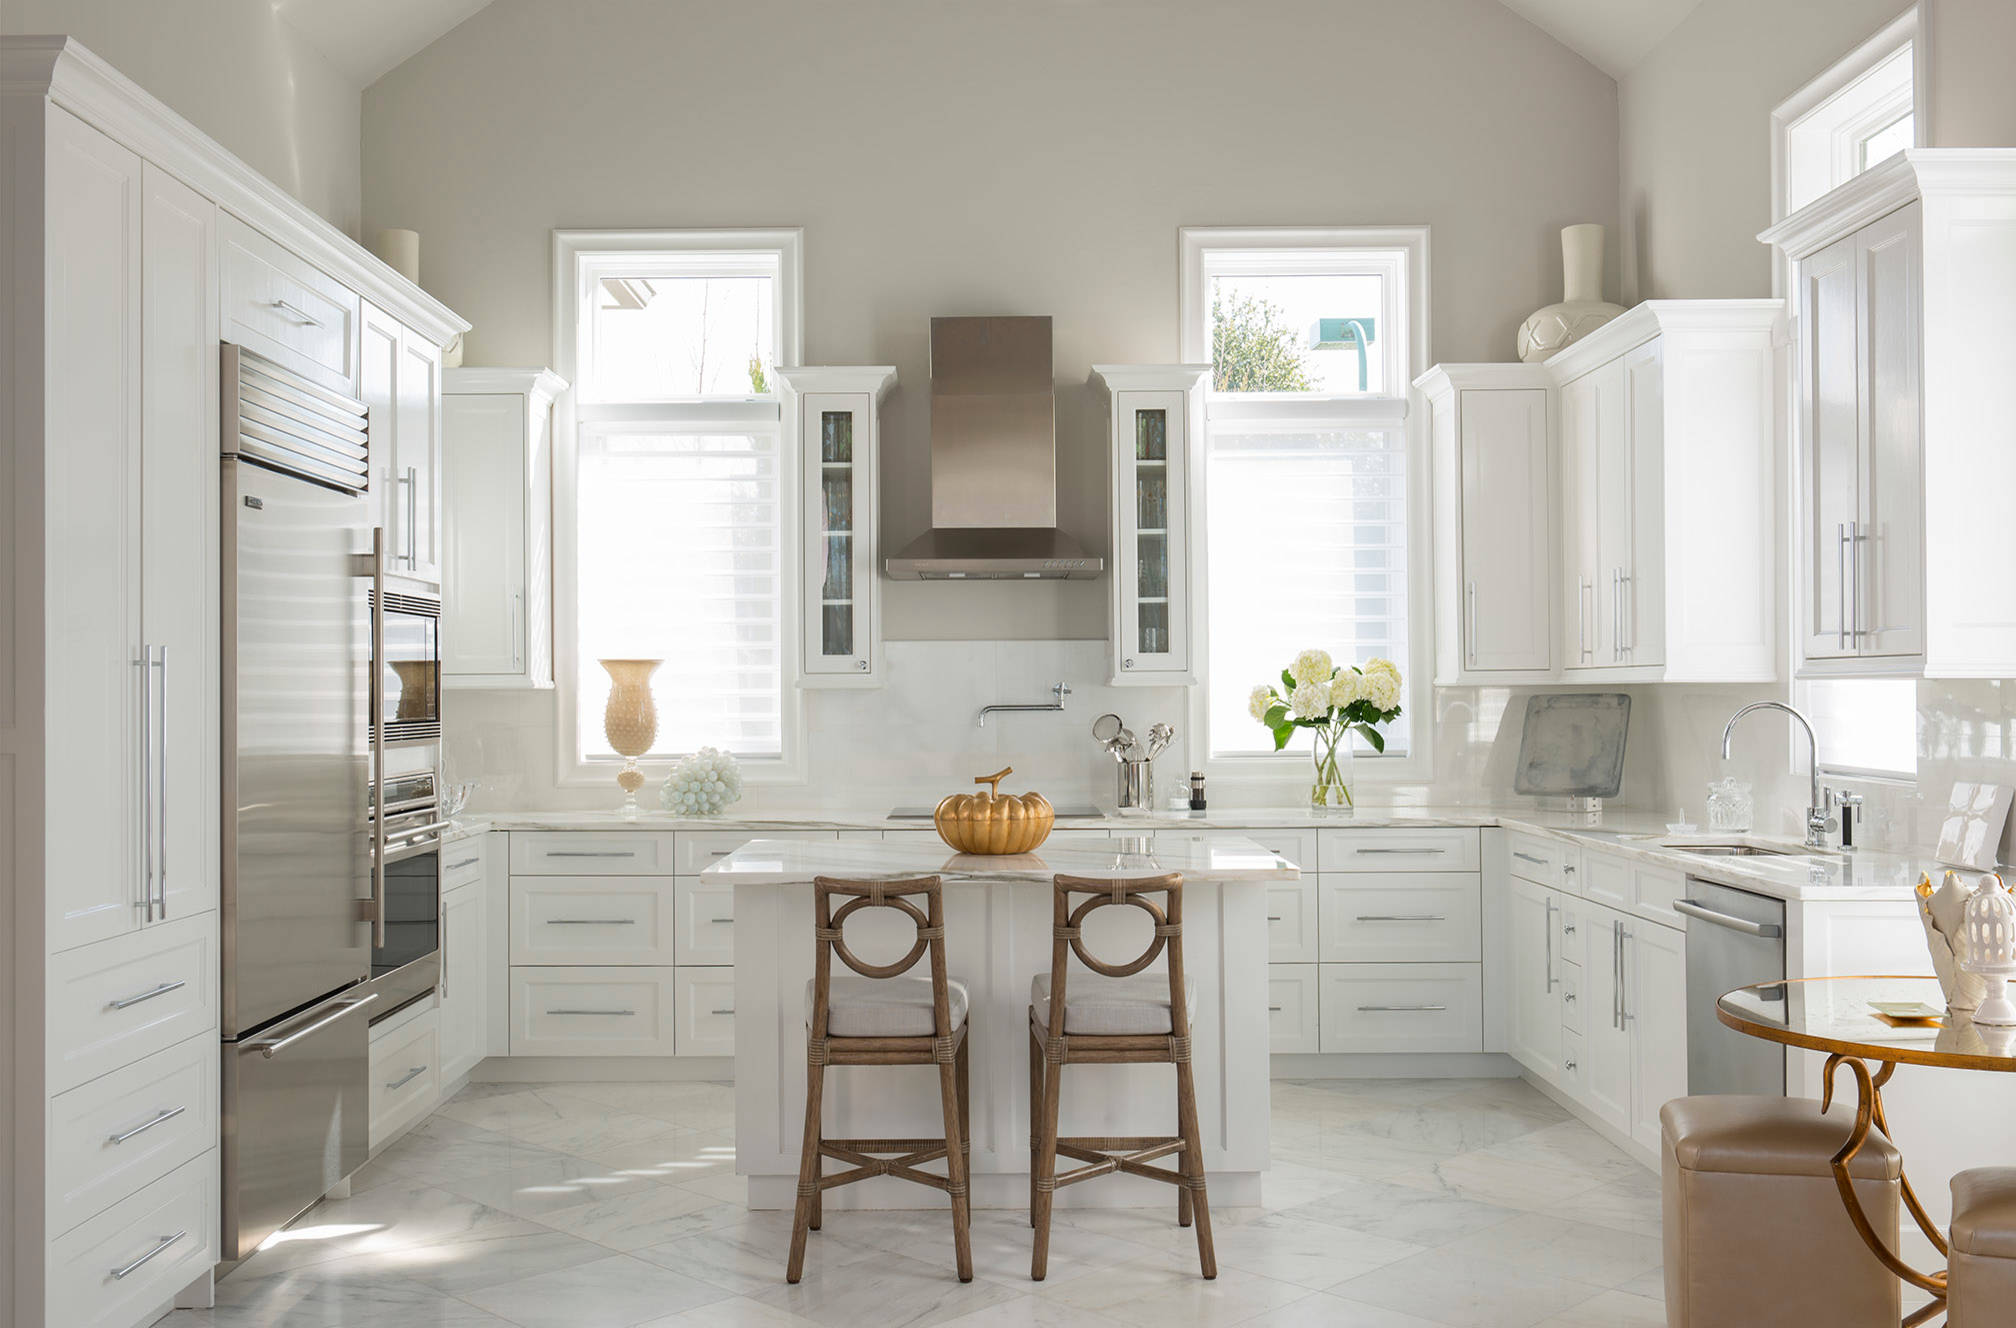 28+ Kitchen Paint Ideas With White Barrbora Kitchen Design